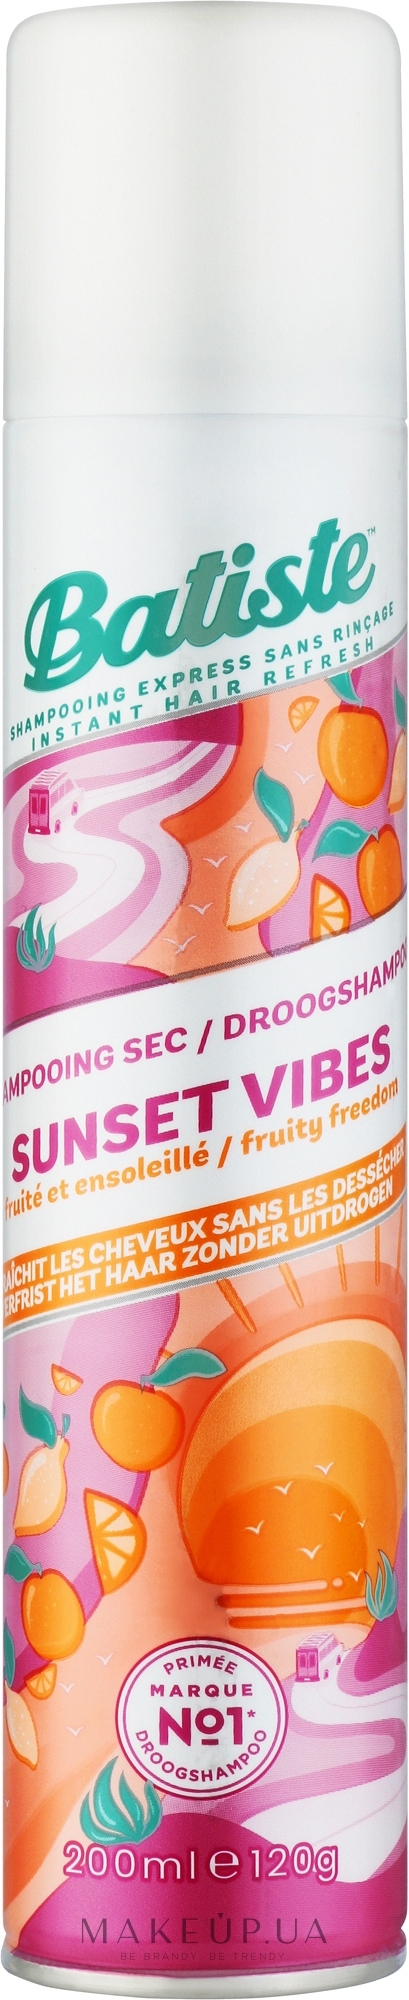 Сухий шампунь - Batiste Sunset Vibes Dry Shampoo — фото 200ml